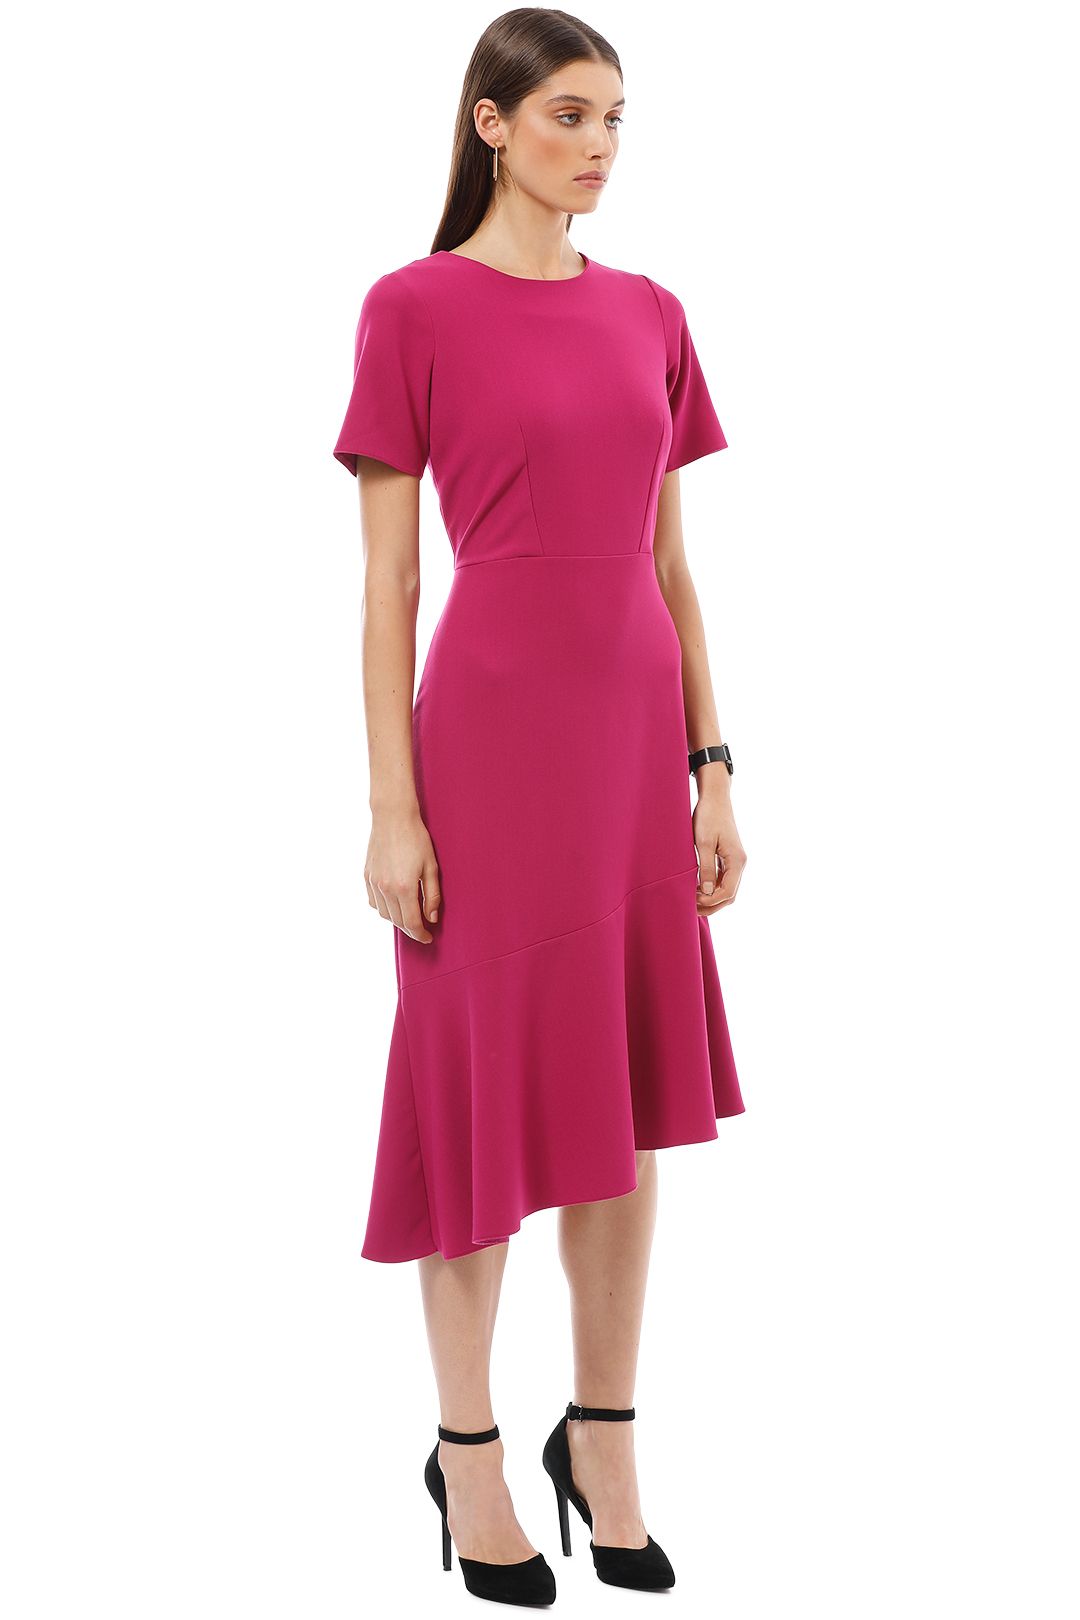 Closet London - Asymmetric Frill Dress - Pink - Side